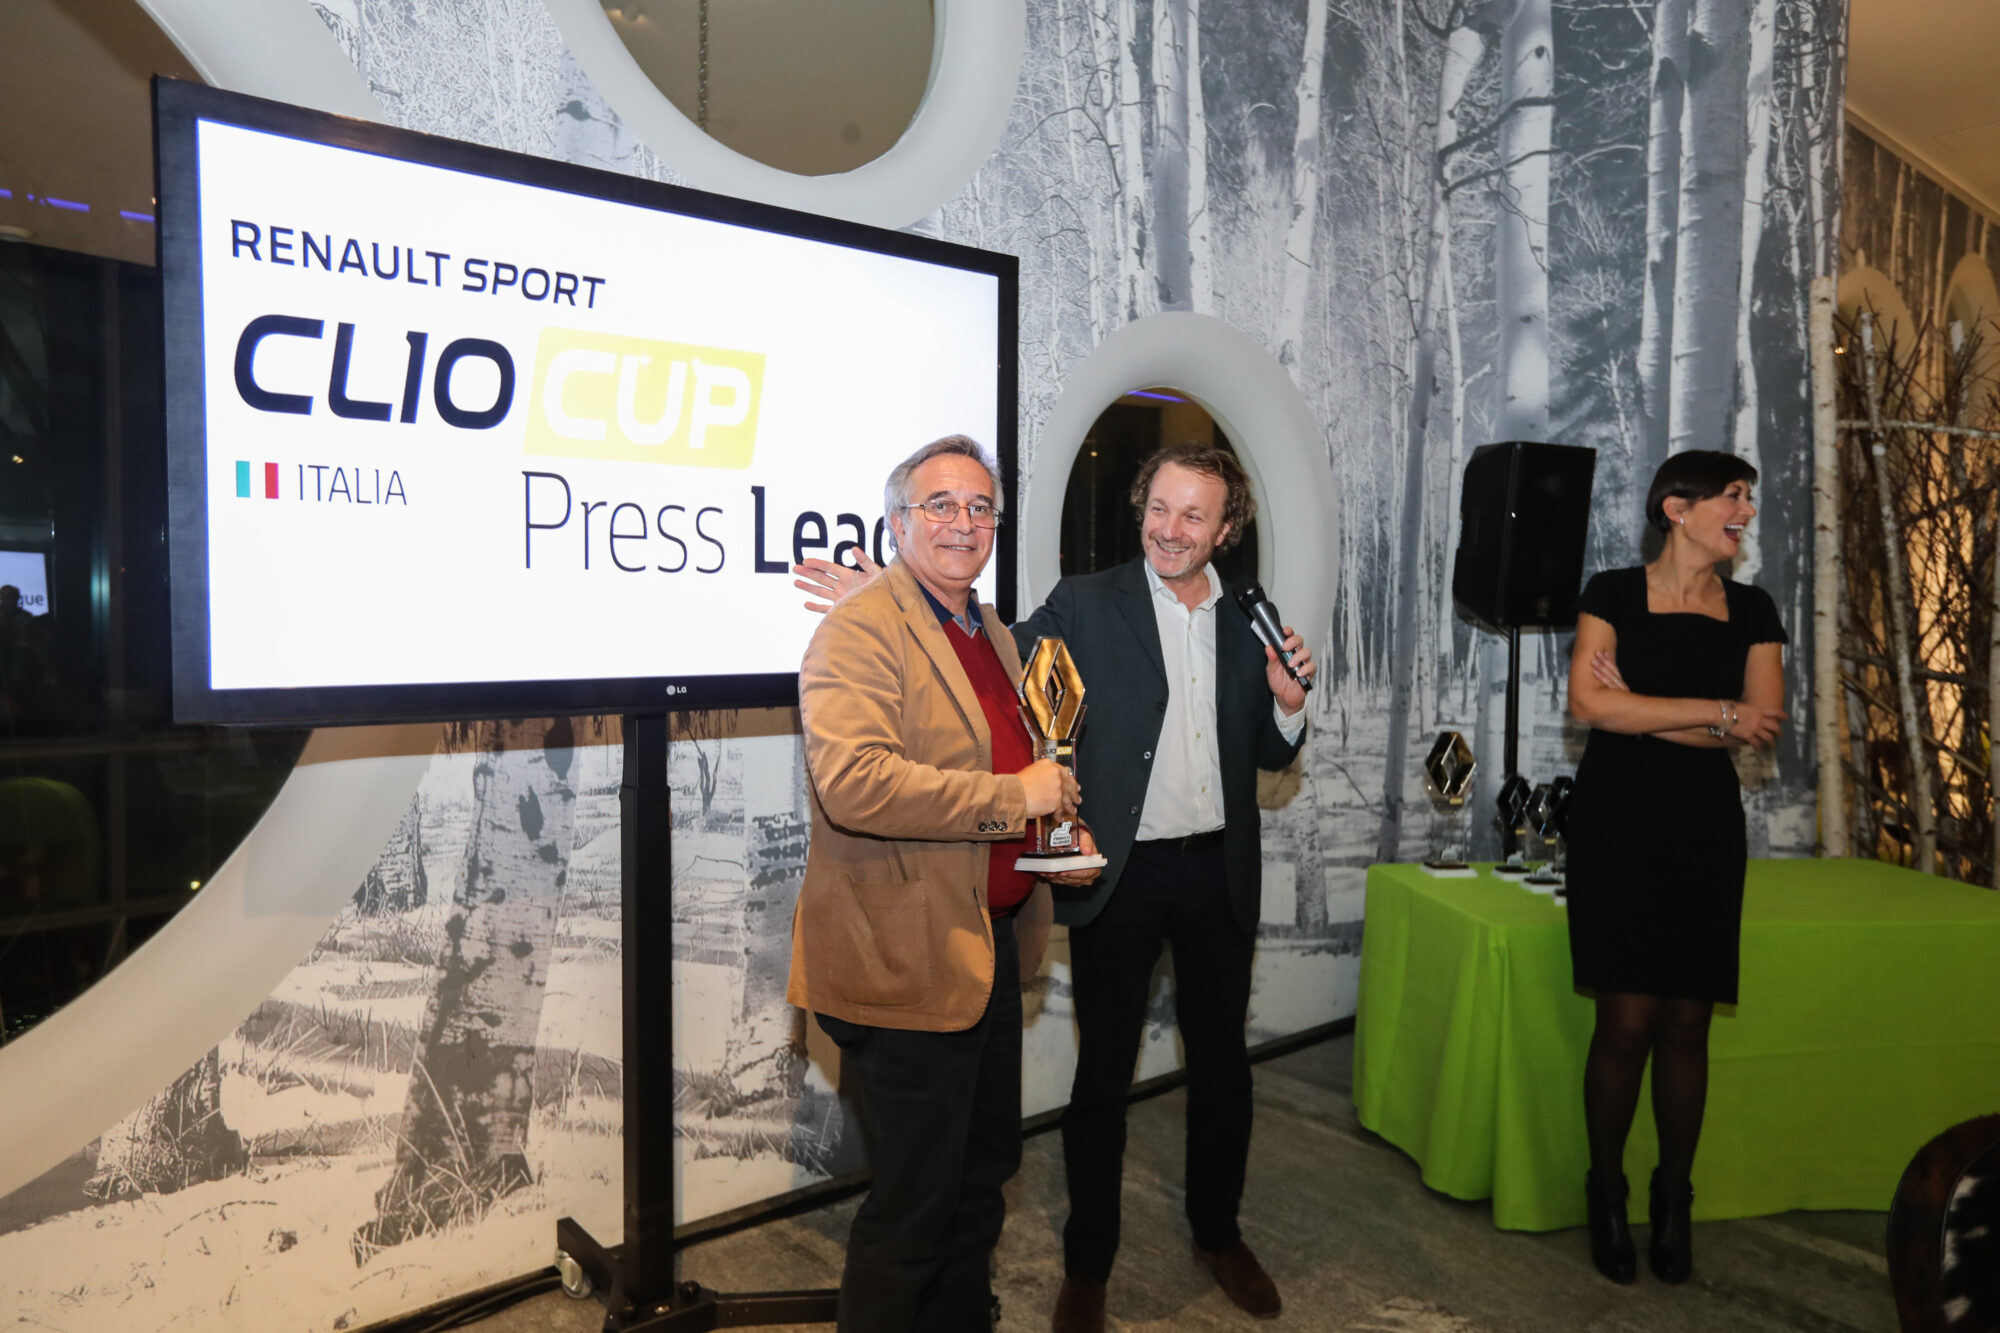 Clio Cup Press League - Premiazione